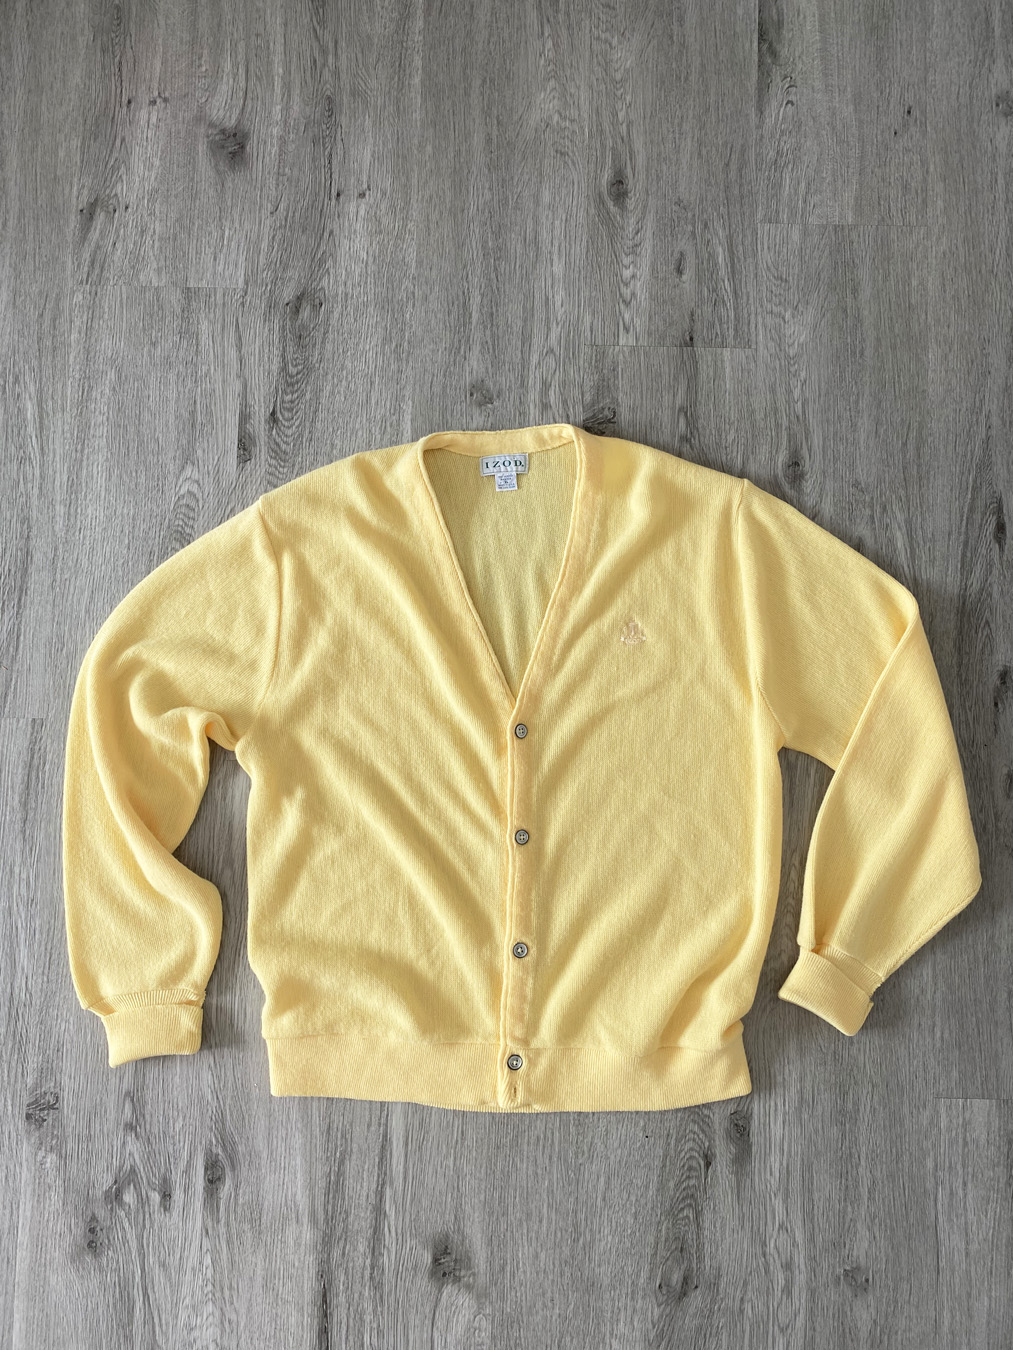 Vintage Lacoste IZOD Yellow Cardigan Sweater - 5 Star Vintage